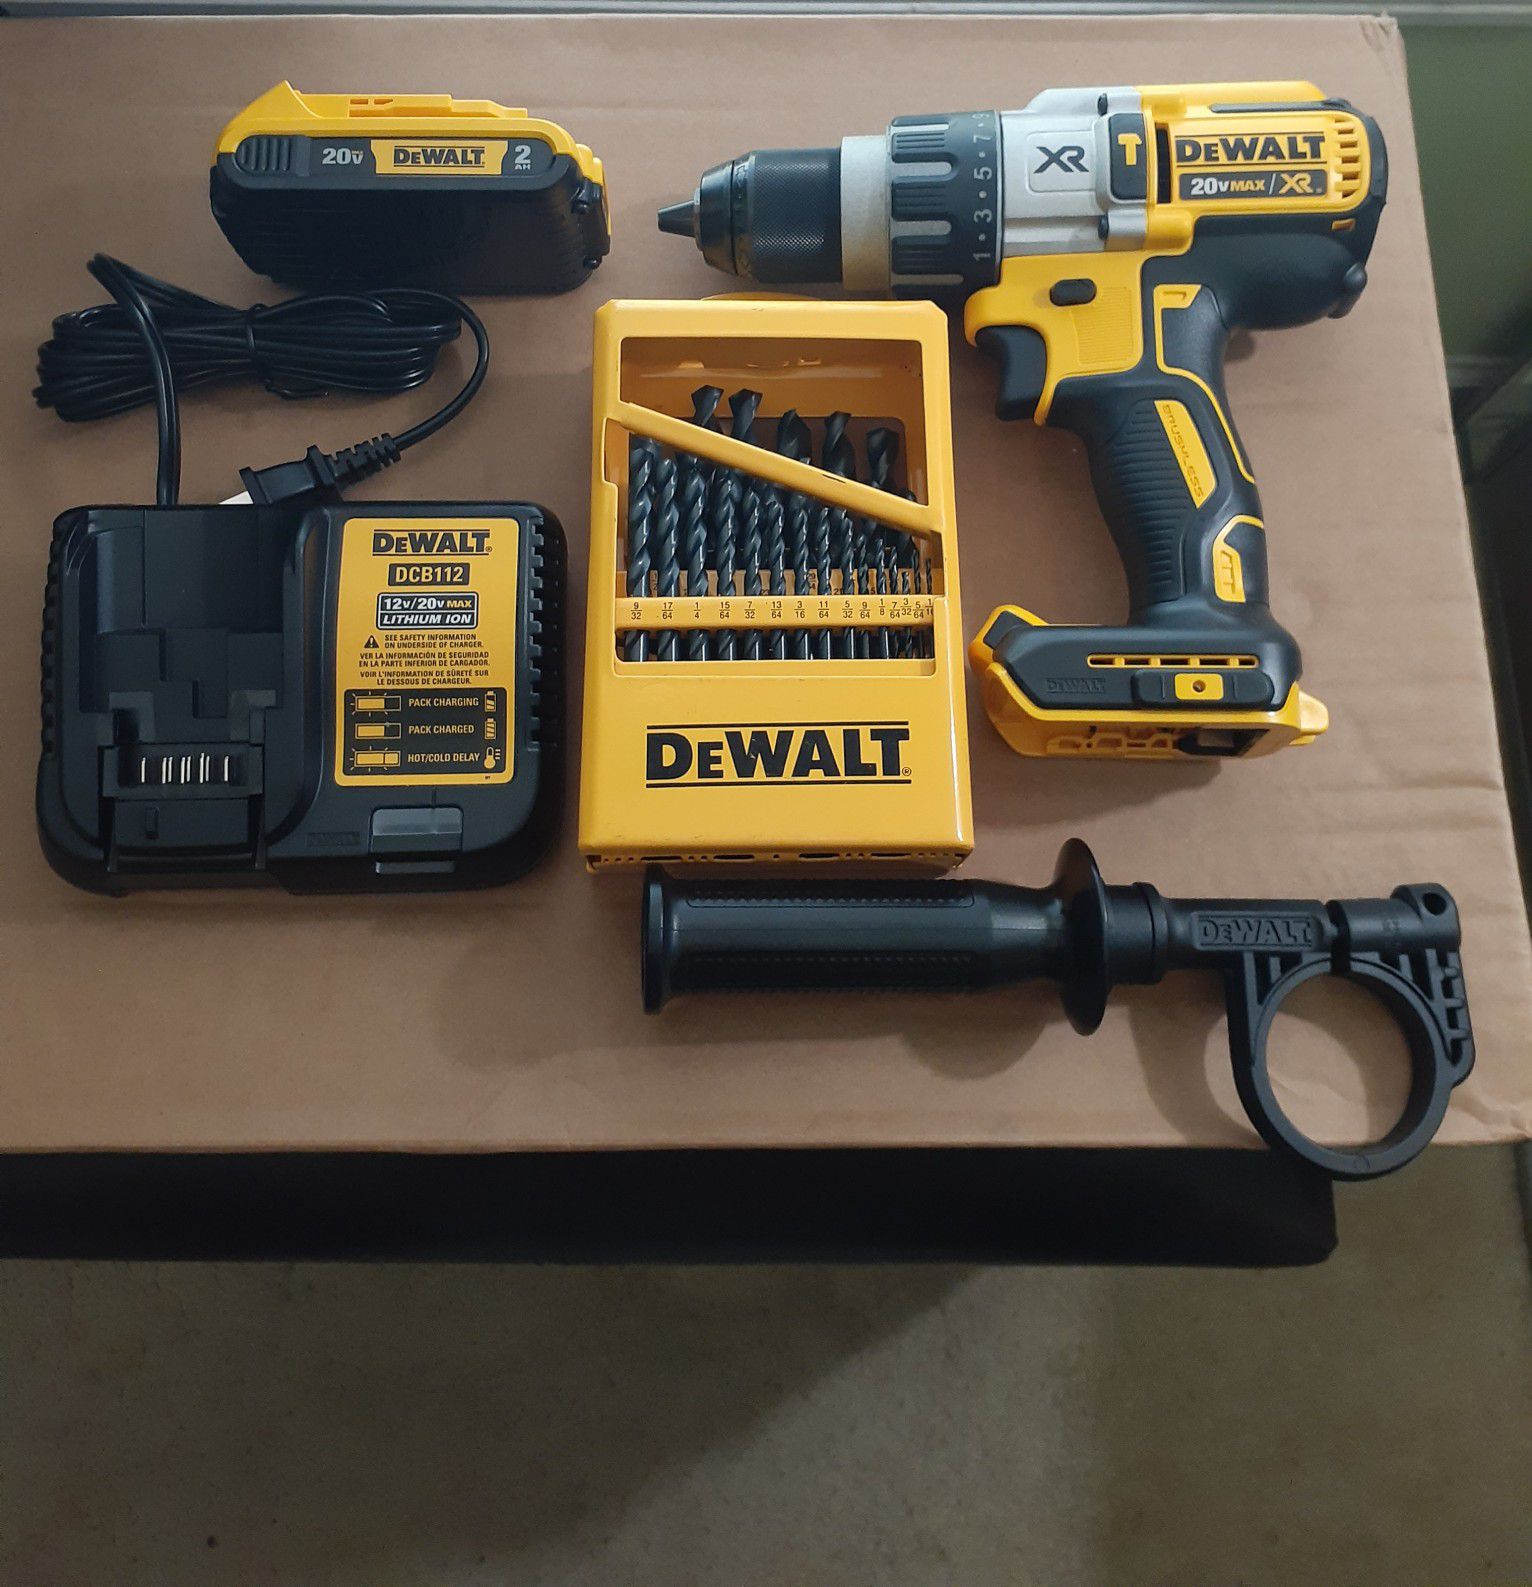 Dewalt 1/2 inch Hammer drill and bits (New)